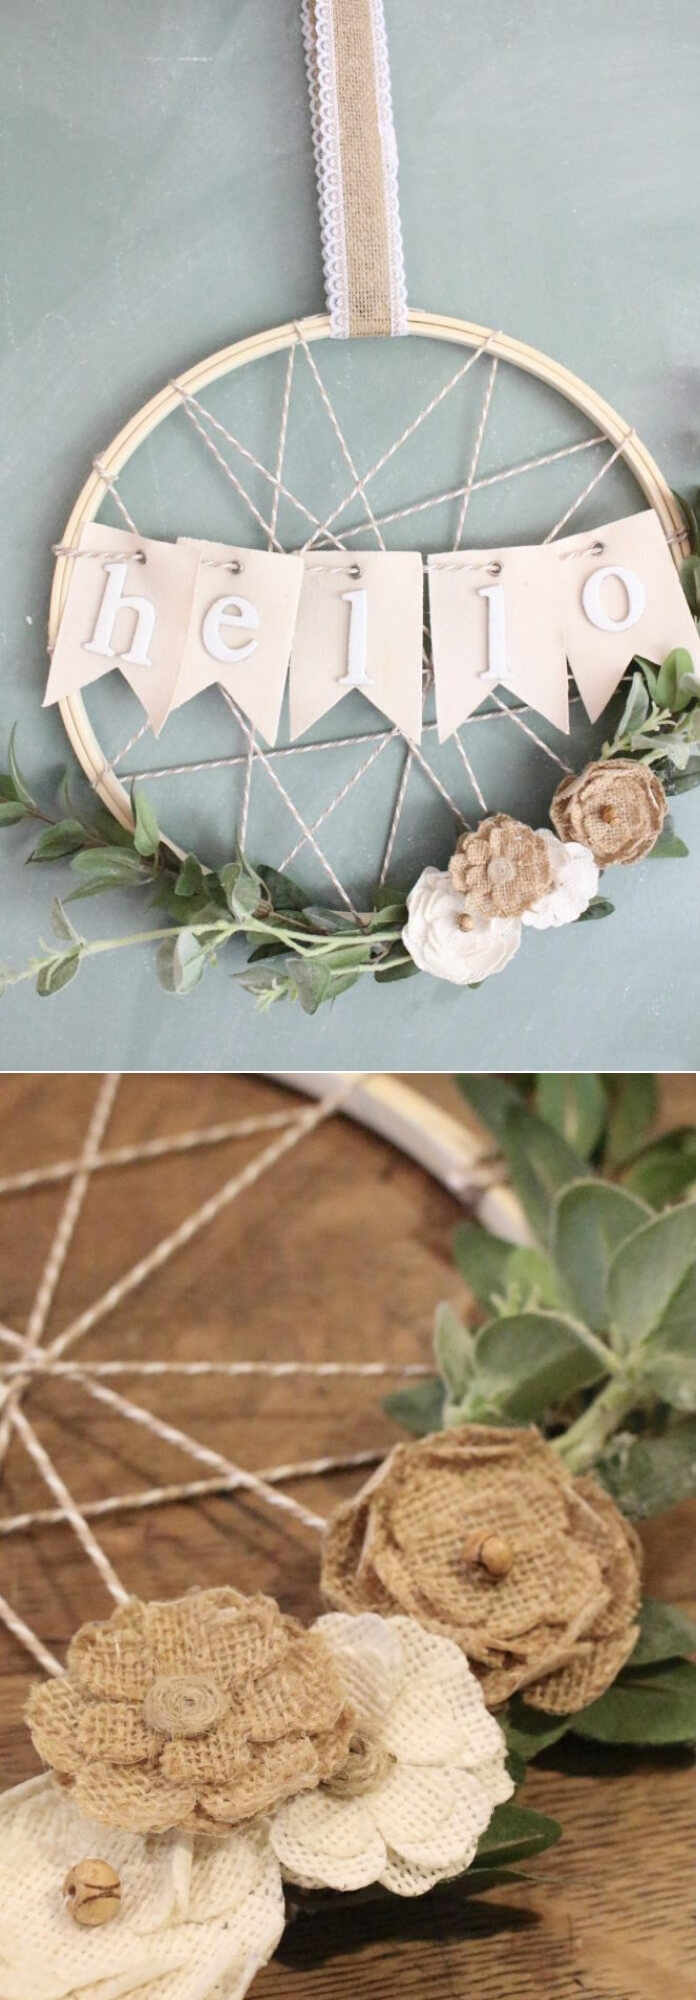 Easy and Simple DIY Spring Wreath Ideas | DIY Embroidery Hoop Wreath